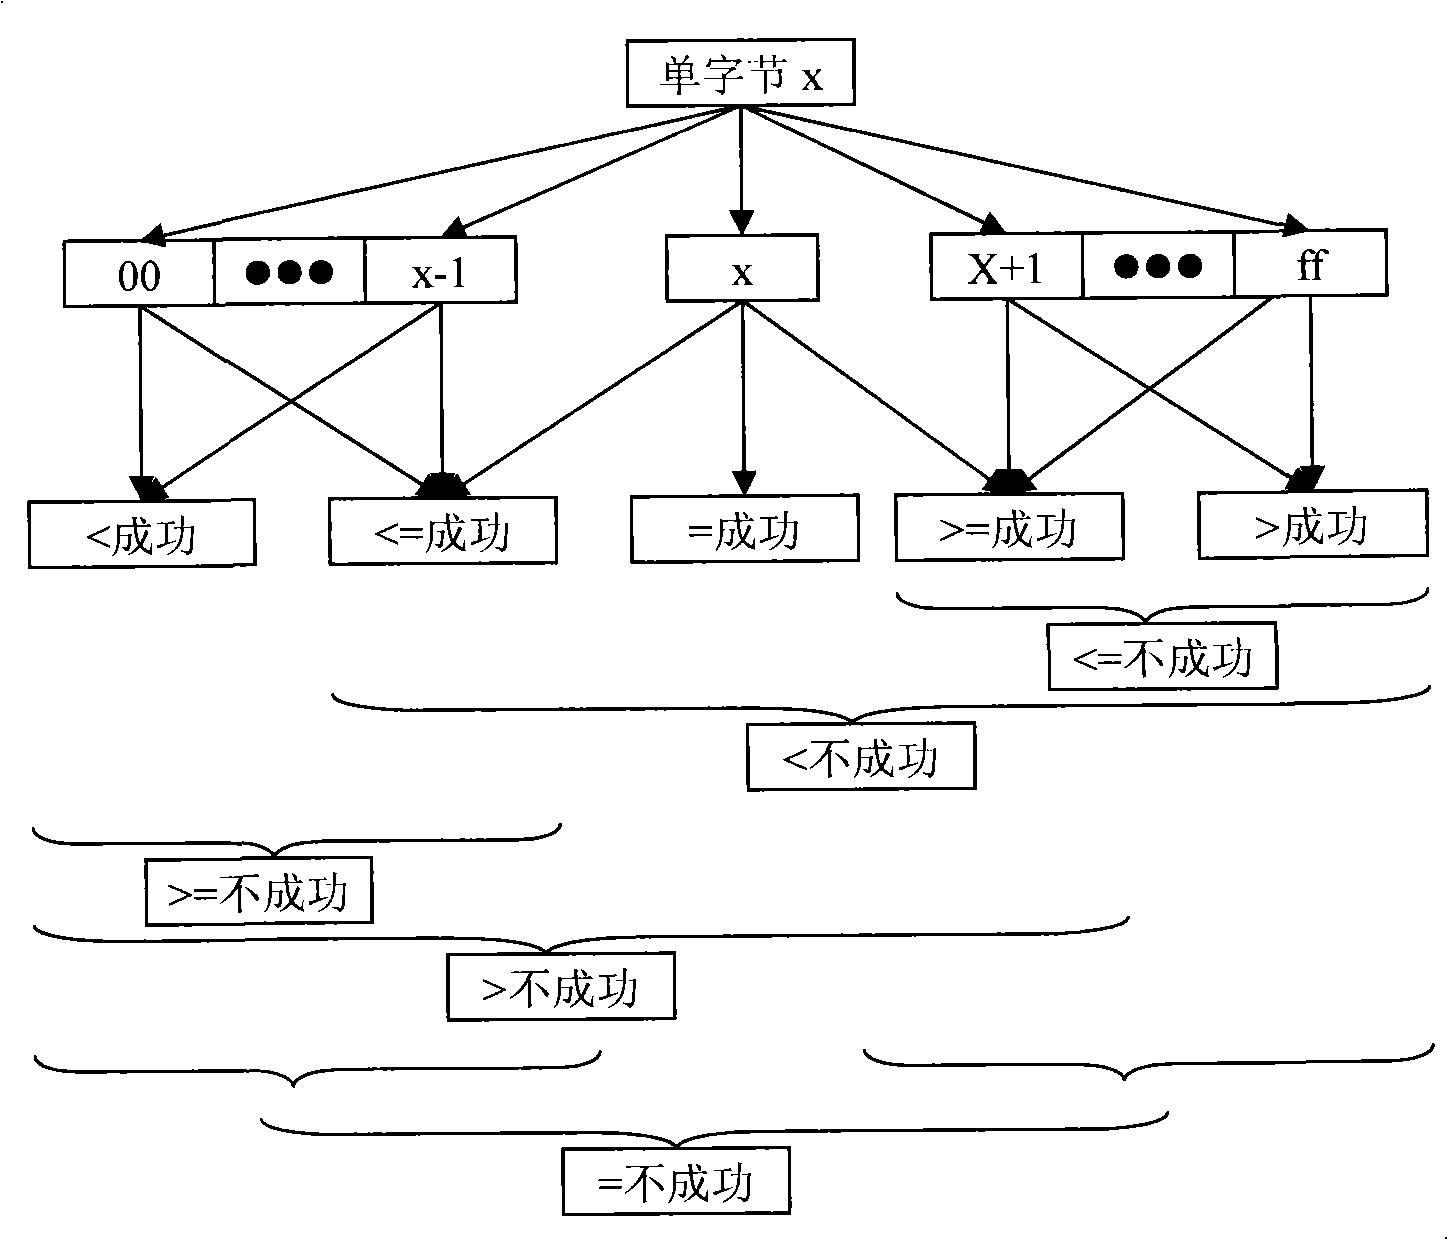 State tree matching method capable of finishing integer matching